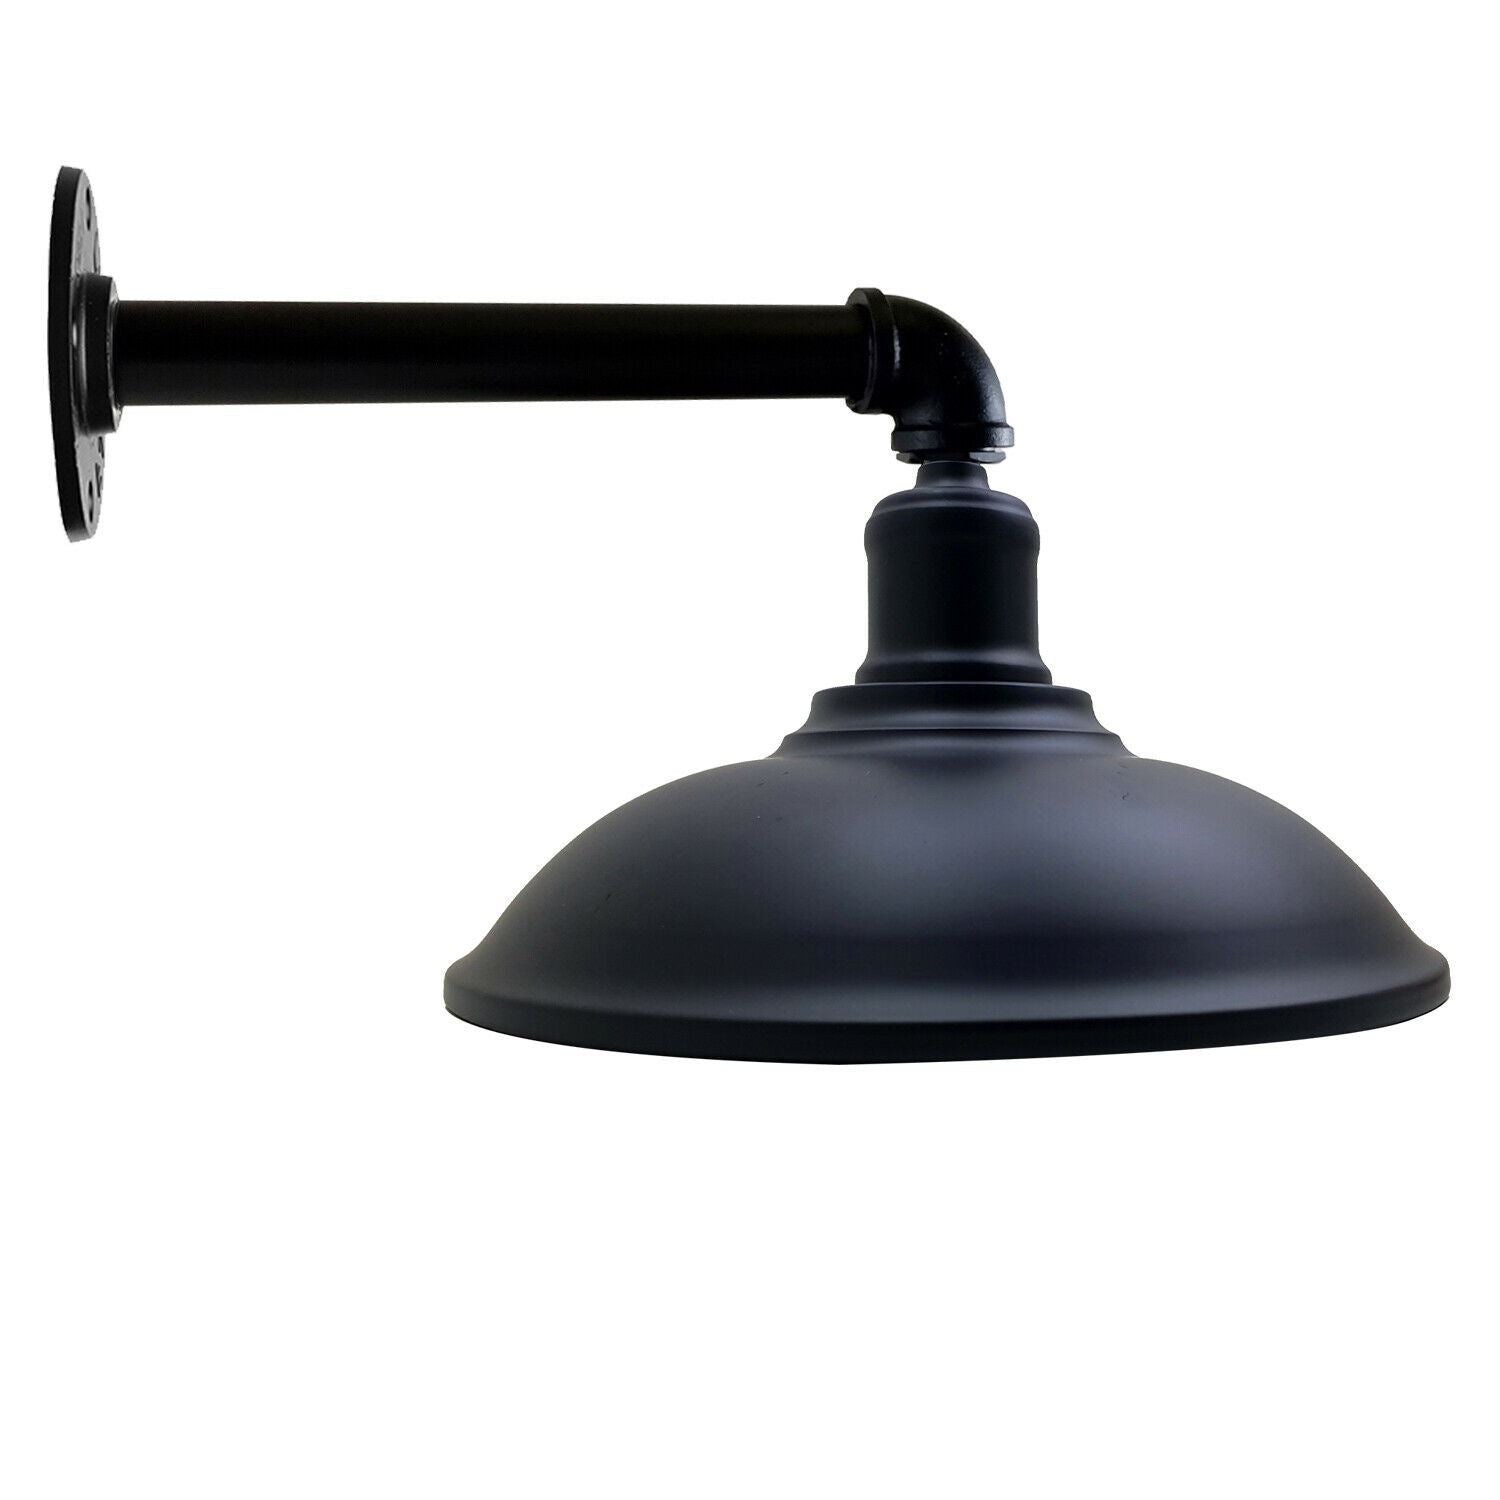 Desk Table Lamp Industrial Retro Steampunk Lighting – LEDSone UK Ltd